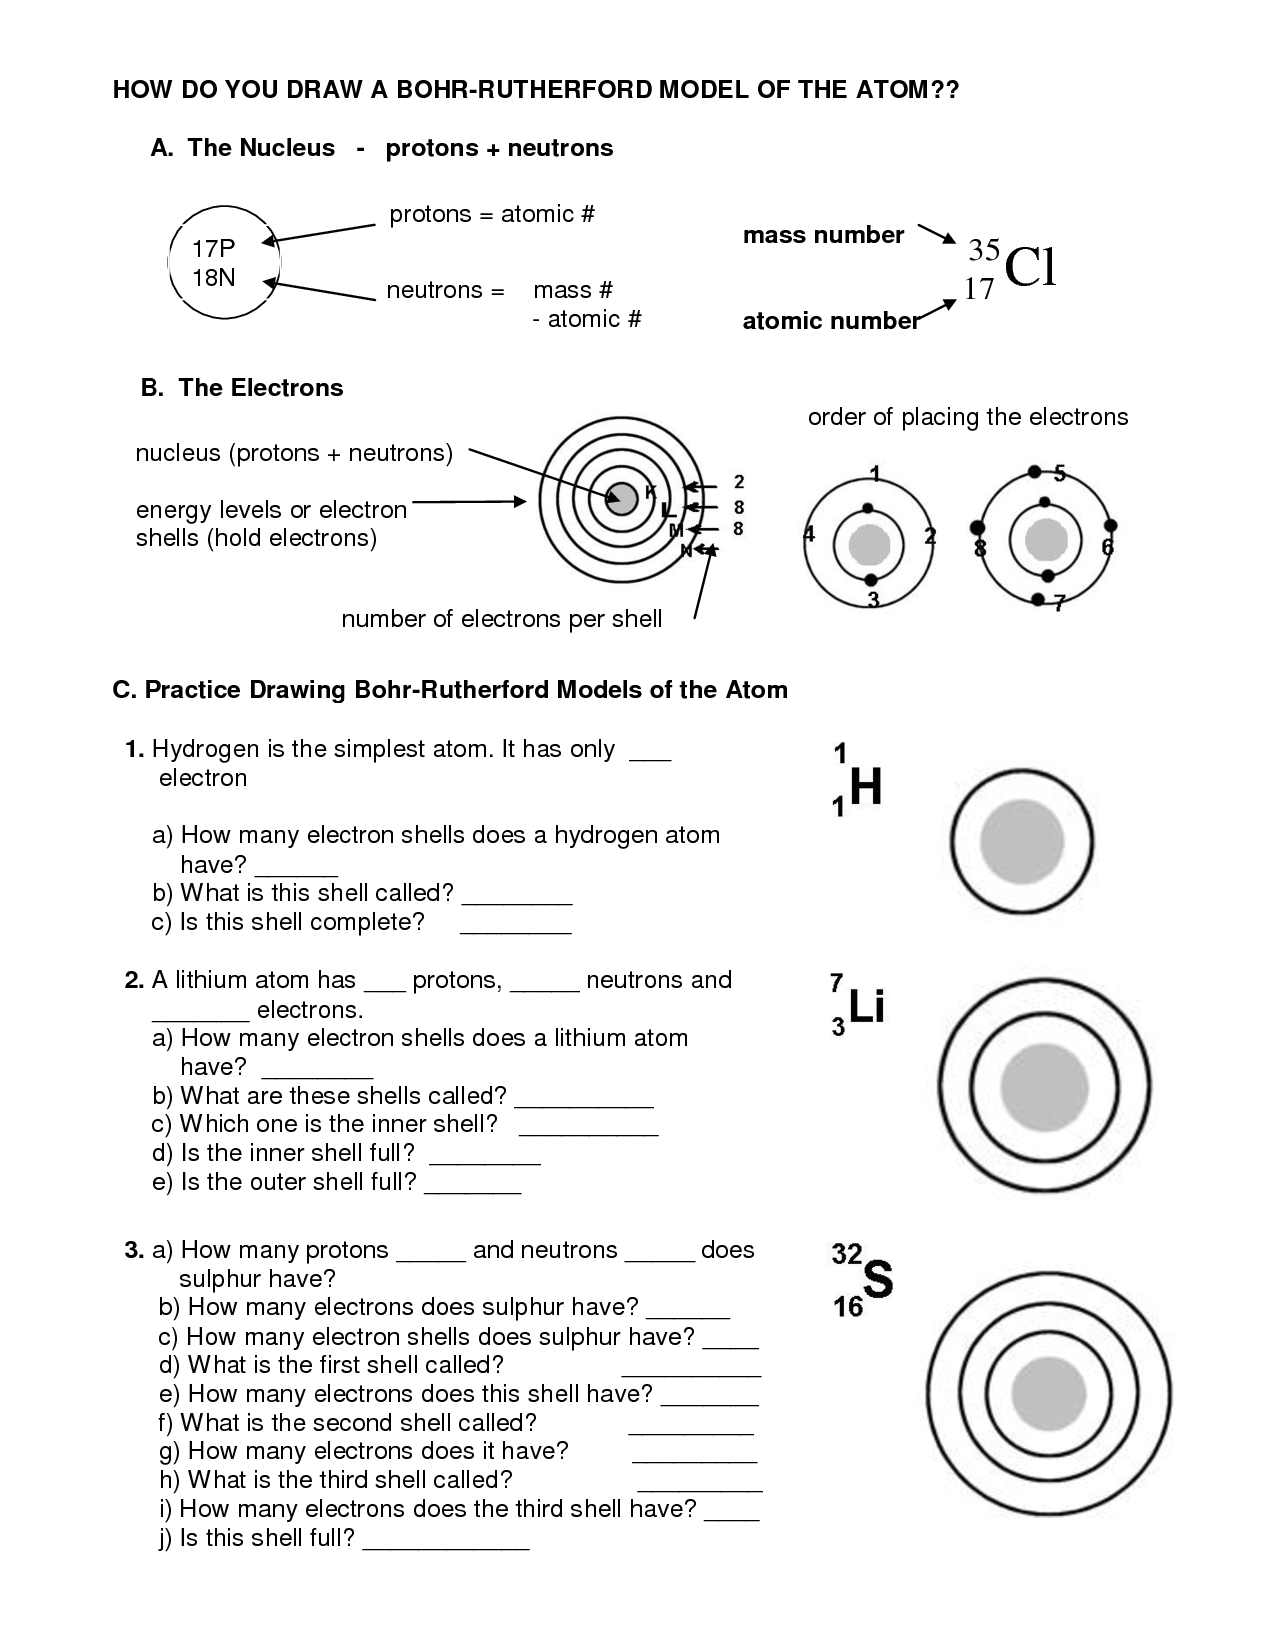 Bohr Model Diagrams Worksheet Answers